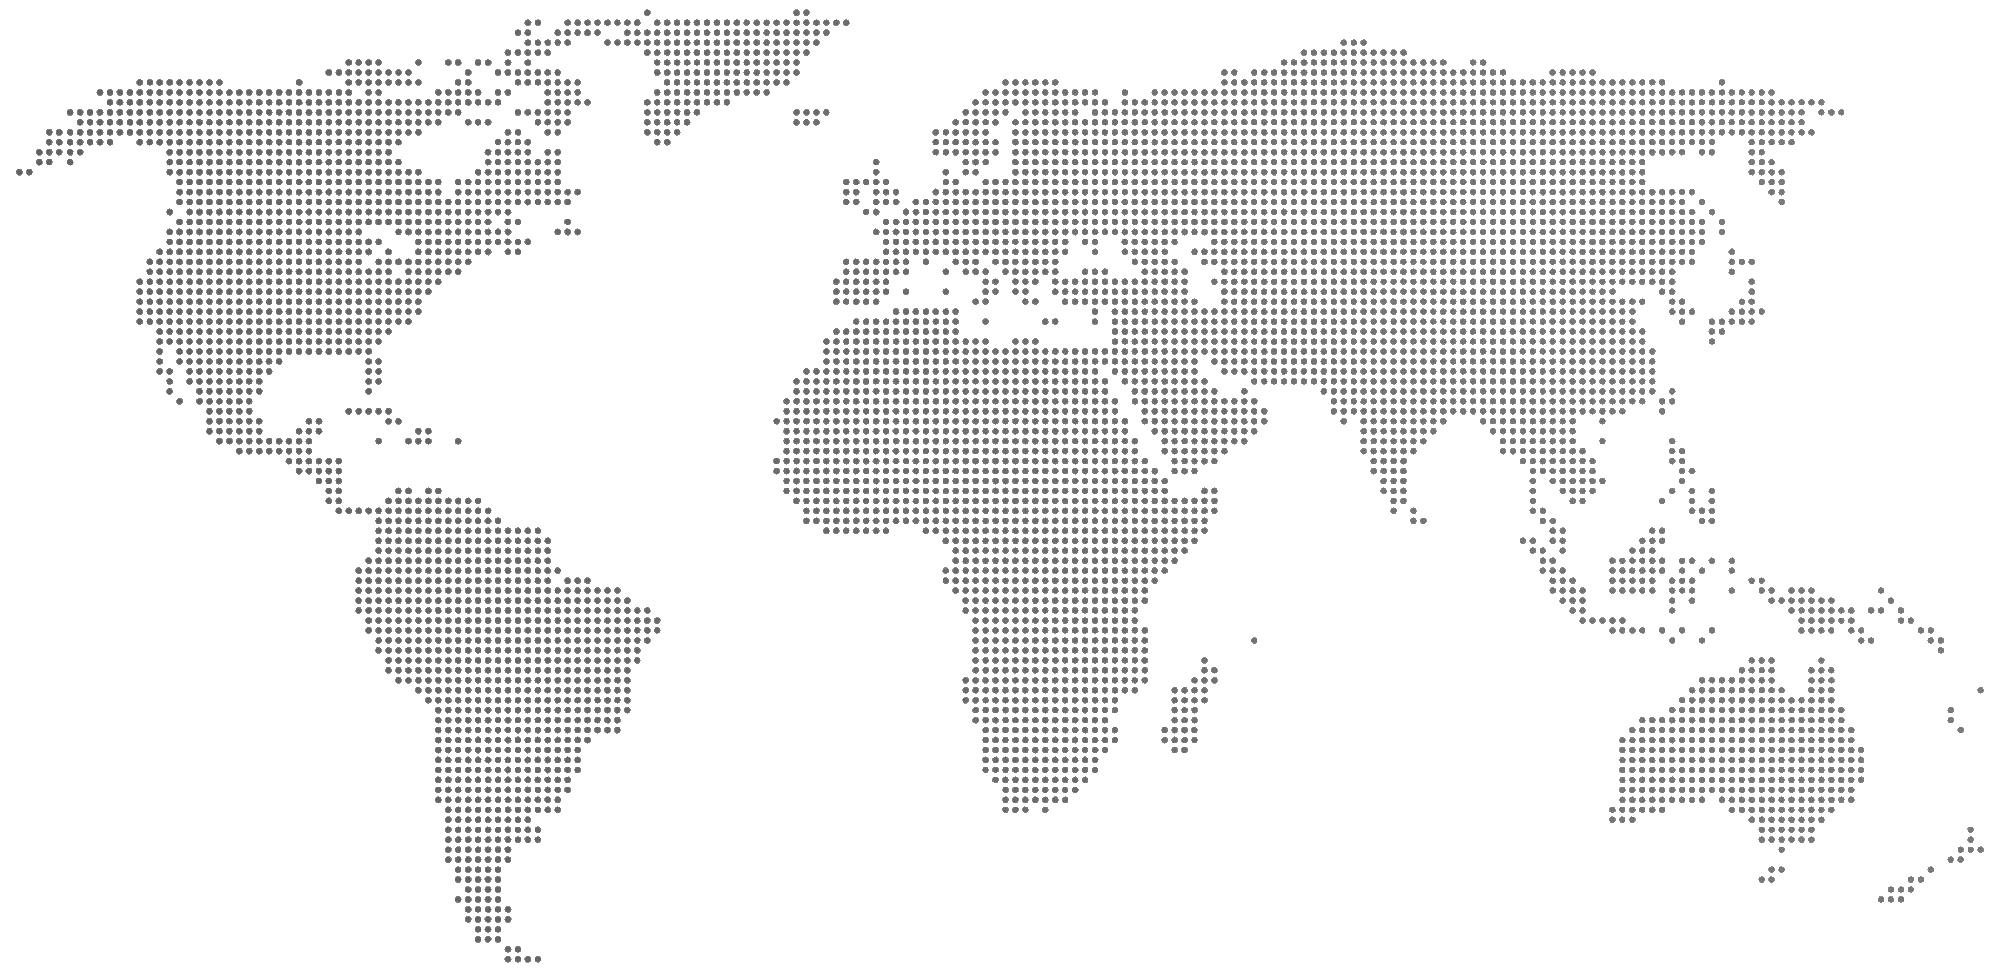 global locations of tde